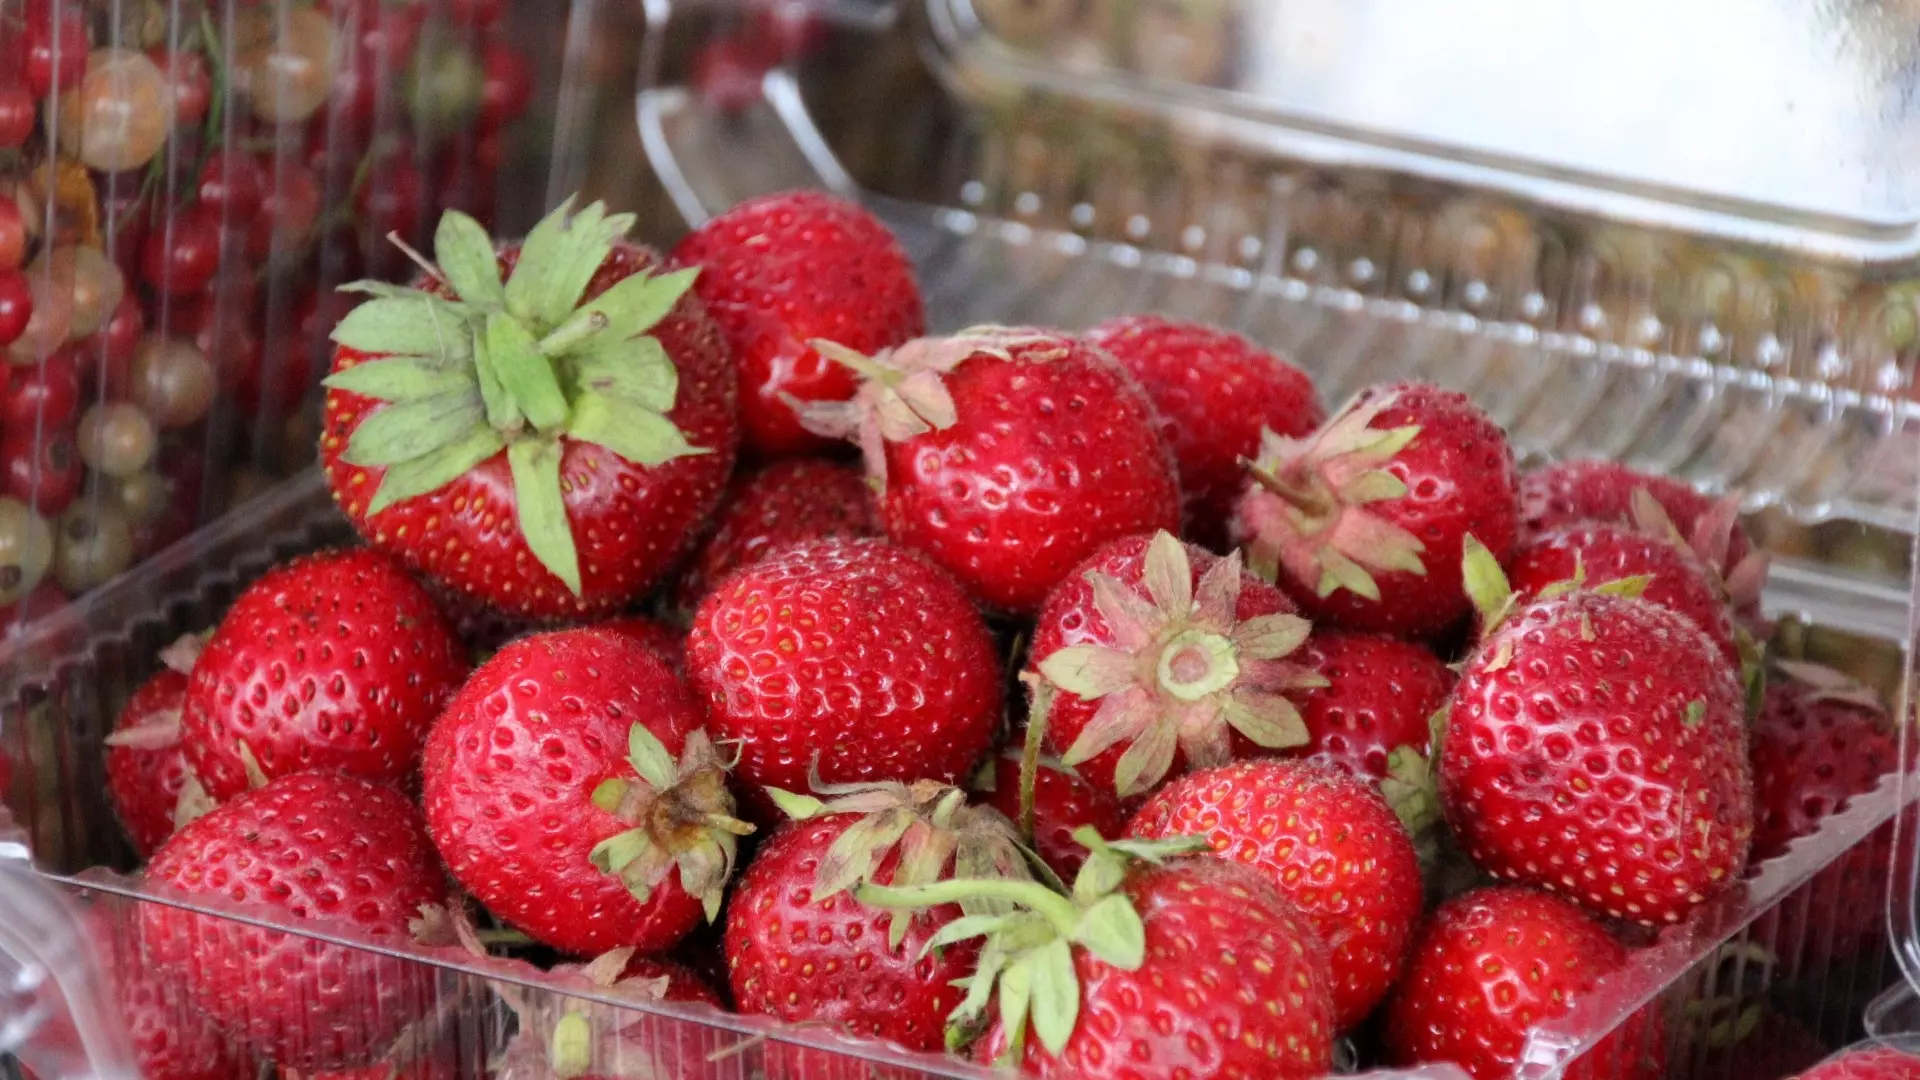 Более 60% россиян предпочитают клубнику среди всех ягод, согласно опросу РИАМО